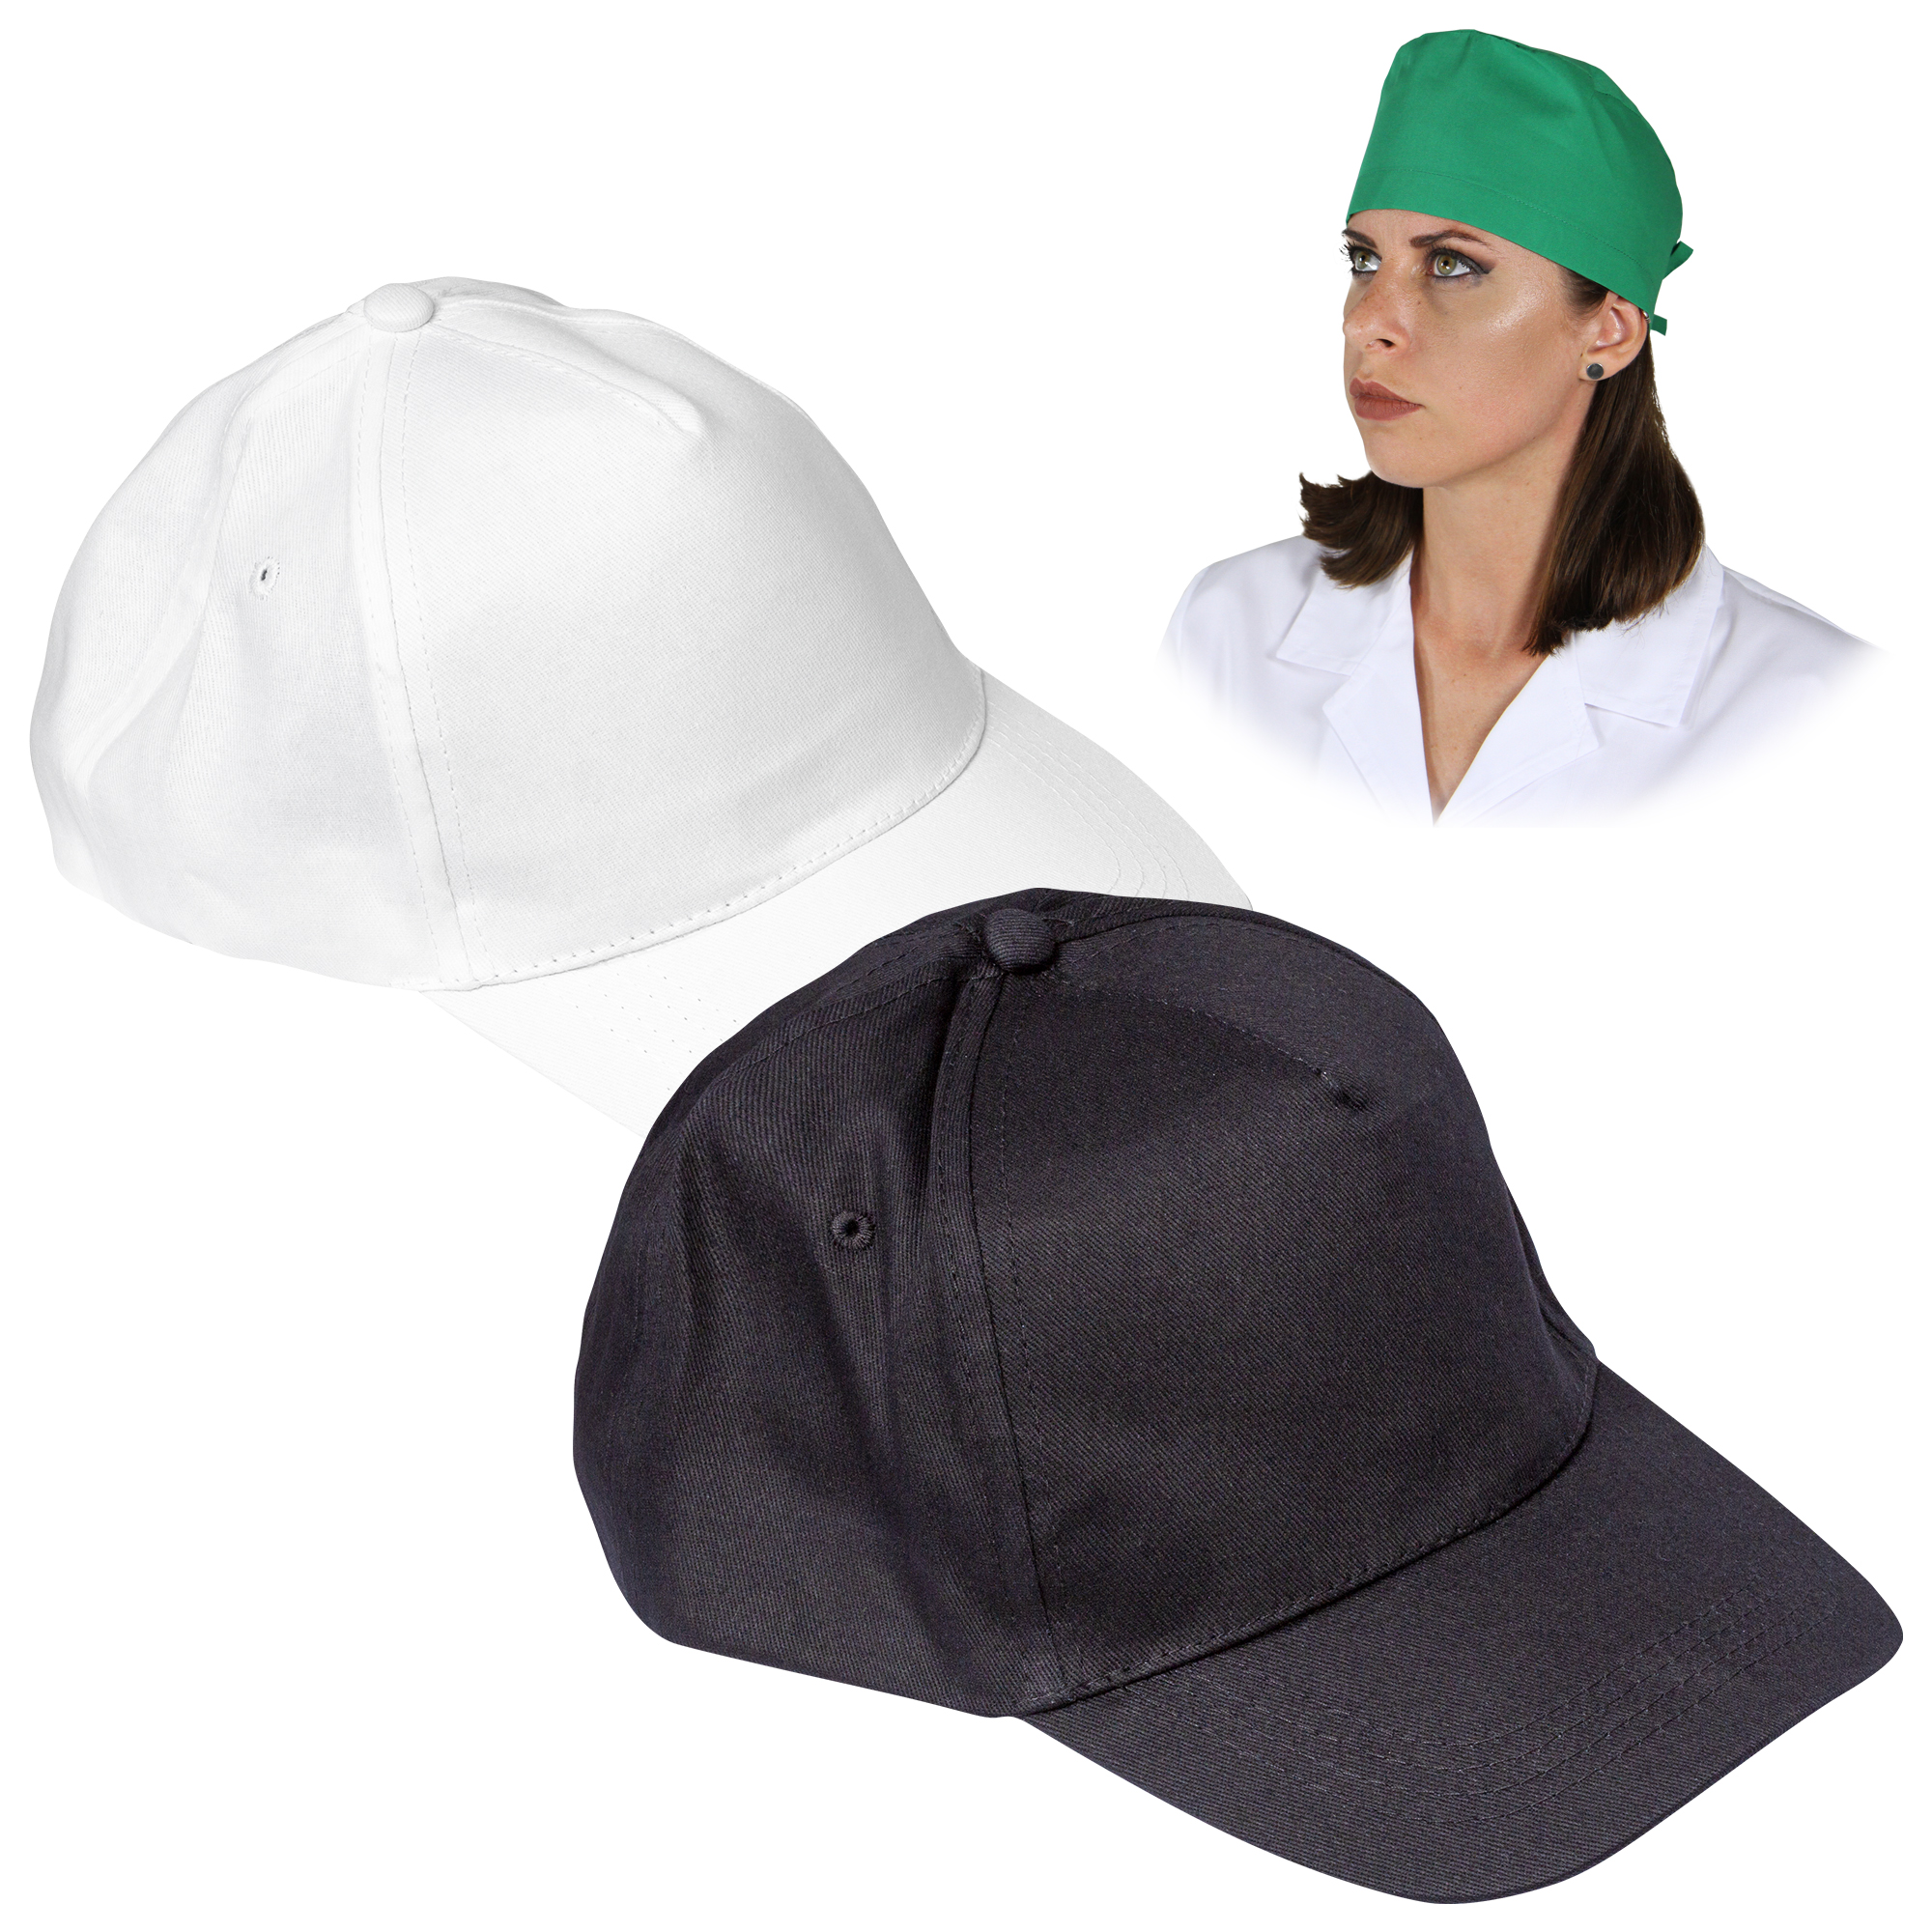 Work Uniforms/PROFESSIONAL UNIFORMS/Working Caps & Headbands